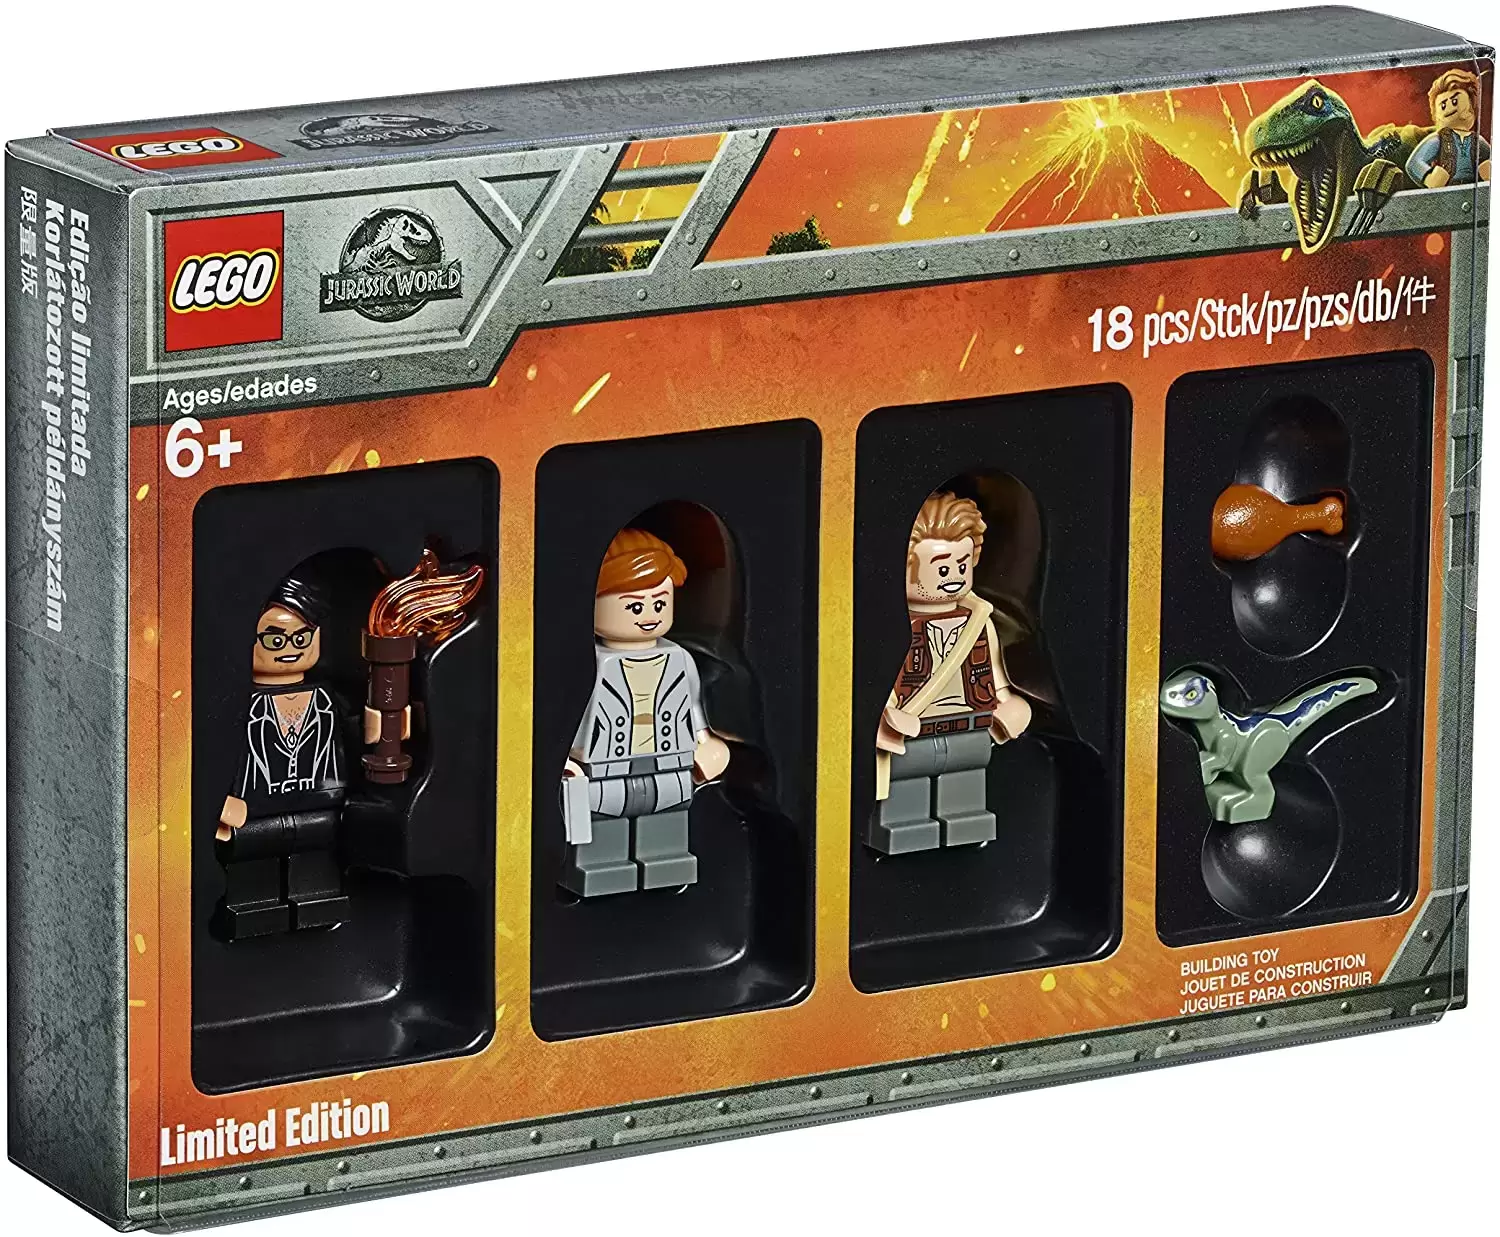 LEGO Jurassic World - Bricktober - Jurassic World Limited Edition Minifigure Set